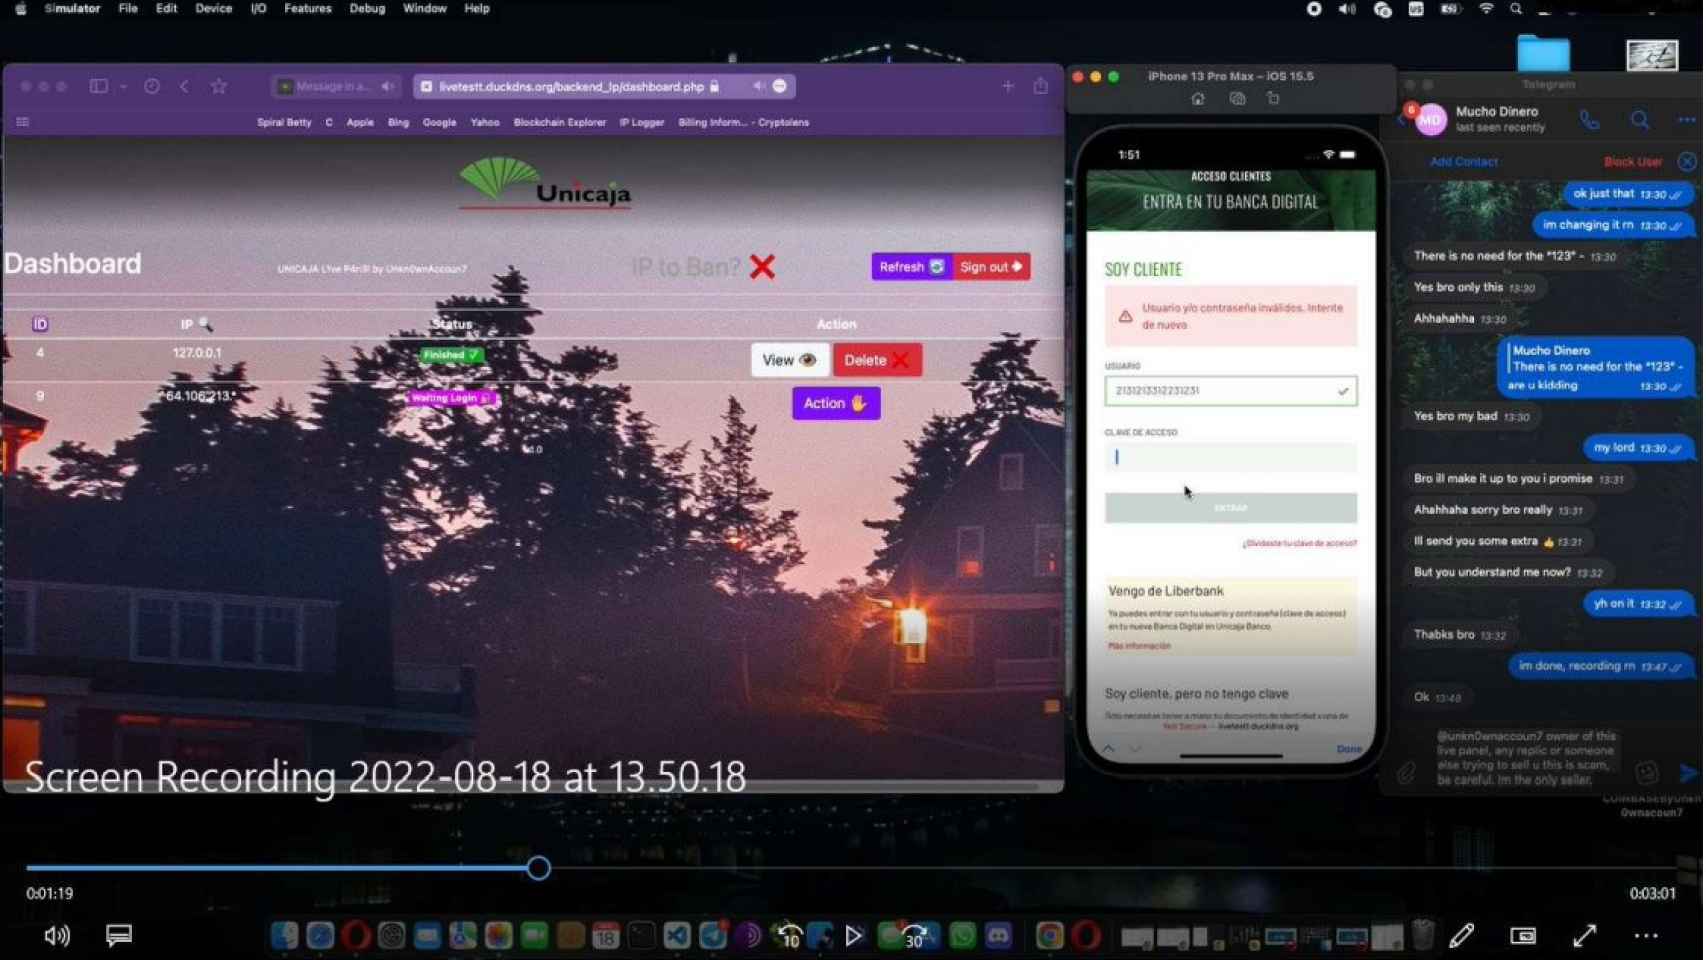 Captura del video tutorial detectado en Telegram para realizar estafas a clientes de Unicaja.